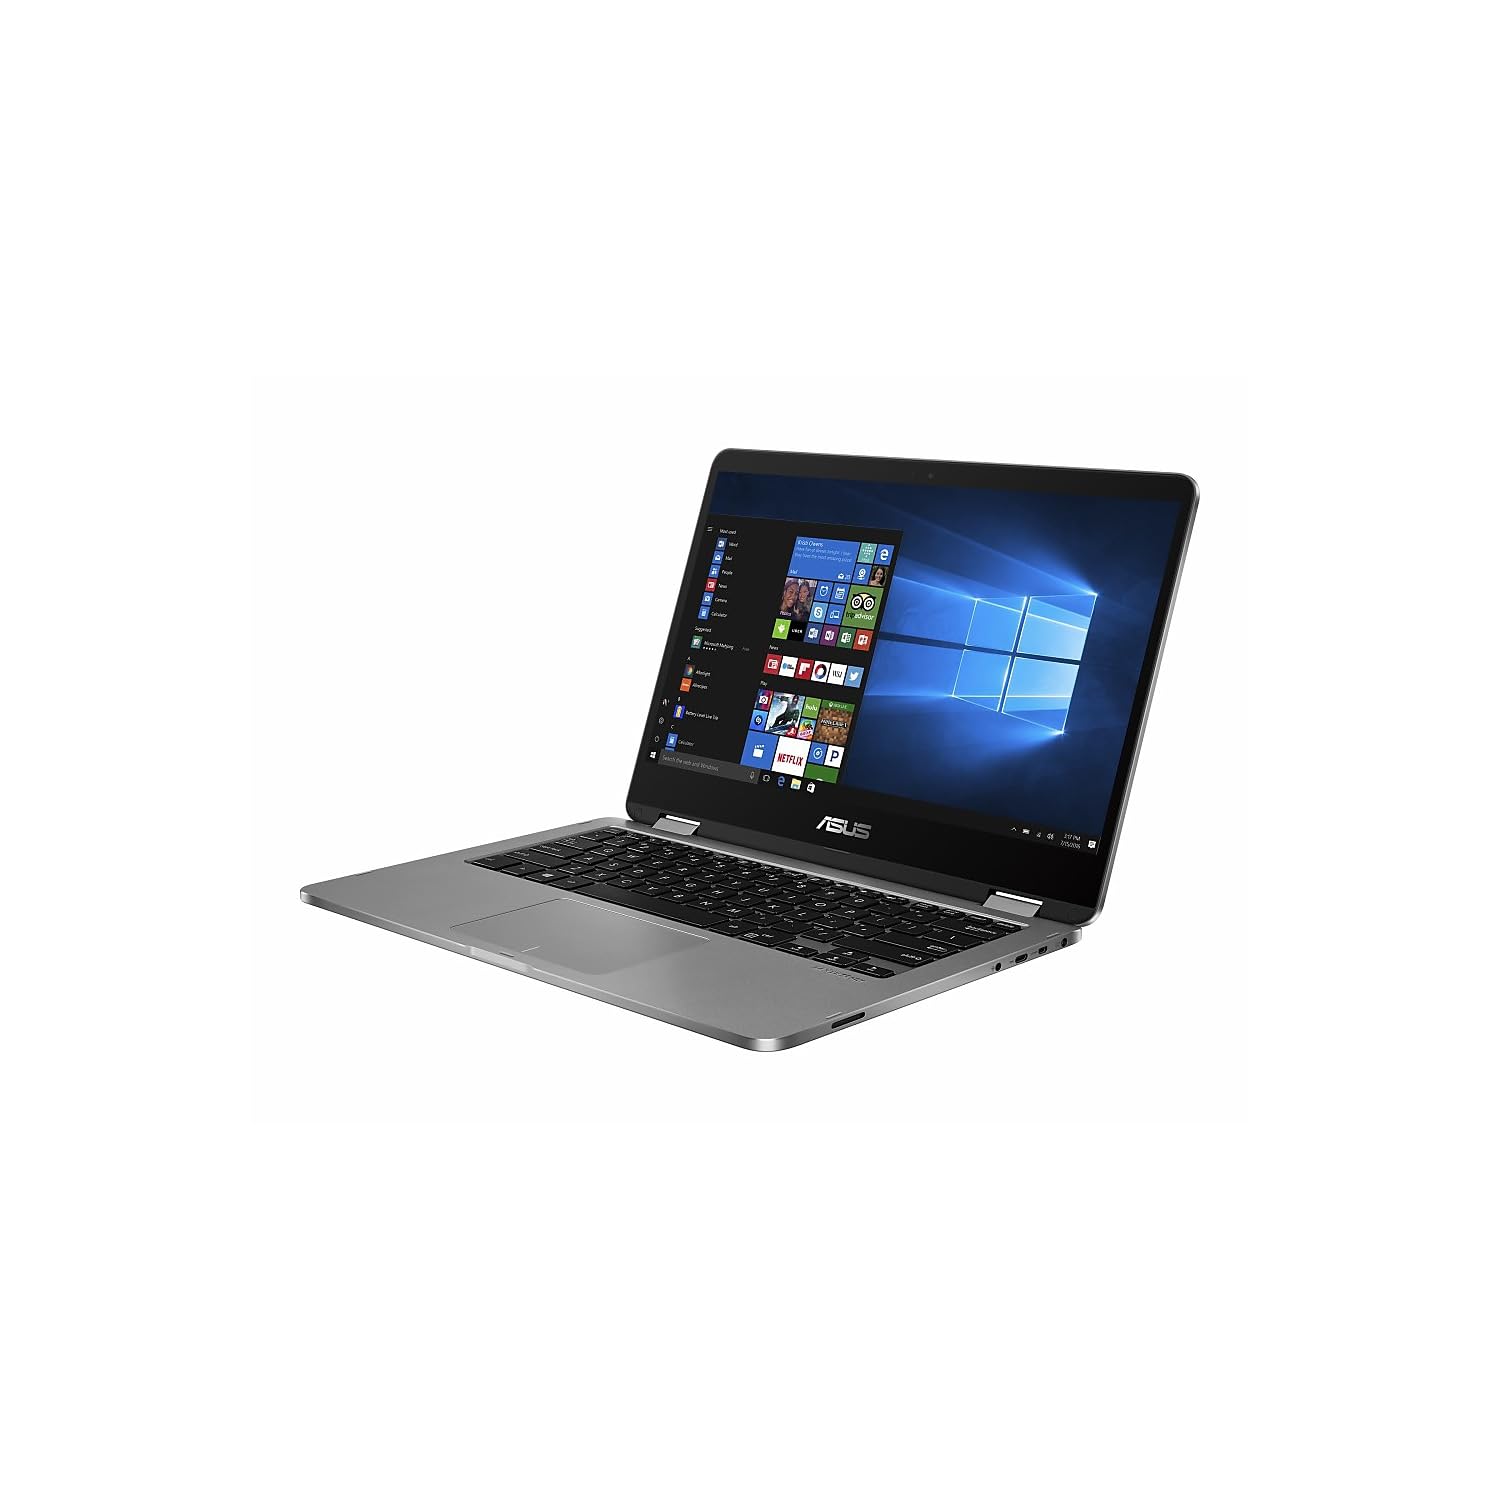 ASUS VivoBook Flip 14 Thin and Light 2-in-1 Laptop, 14” FHD Touchscreen, Intel Pentium Silver N5030 Processor, 4GB RAM, 128GB Storage, Windows 10 Home in S Mode, Light Grey, Fingerprint, J401MA-ES21T